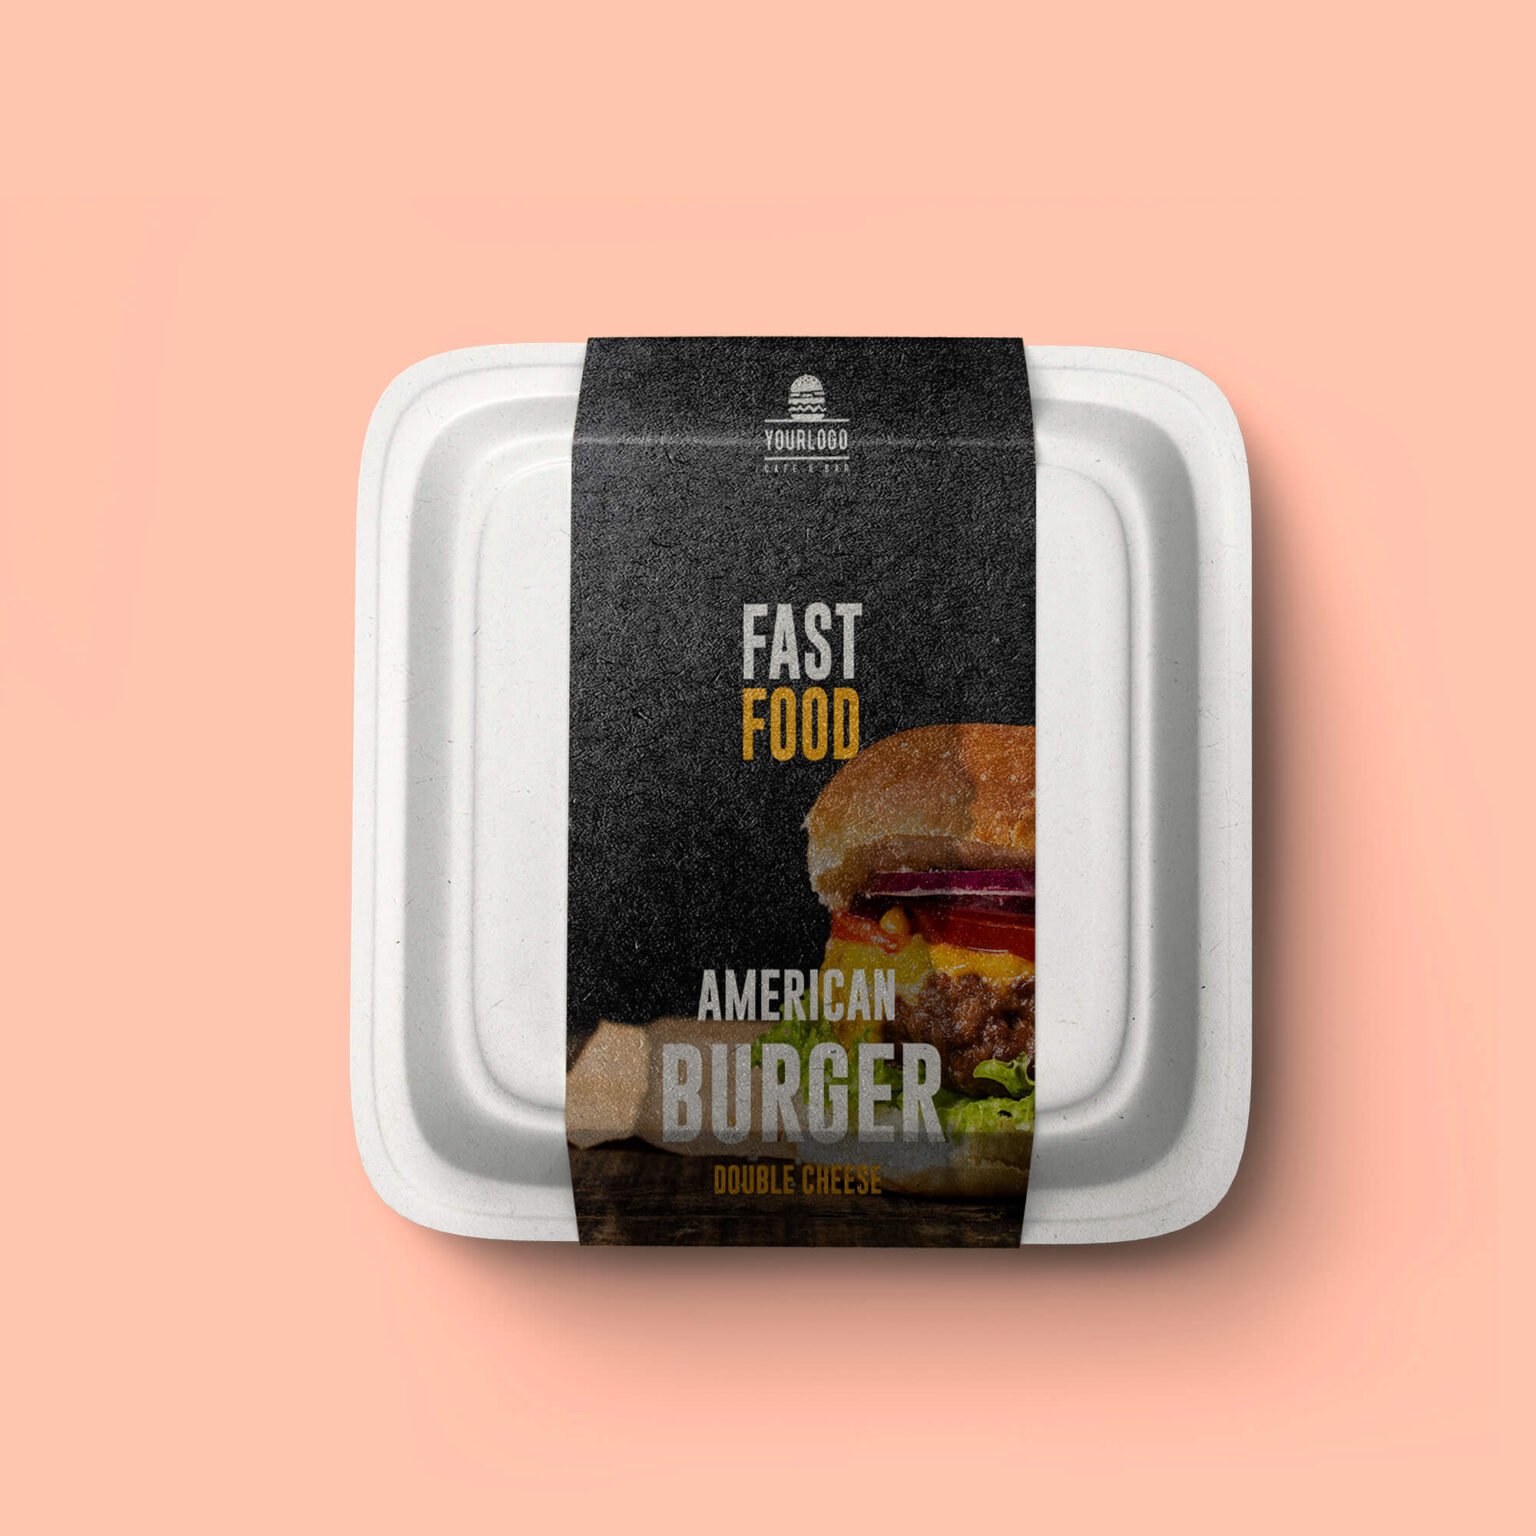 Download Free Fast Food Packaging Mockup PSD Template - Mockup Den